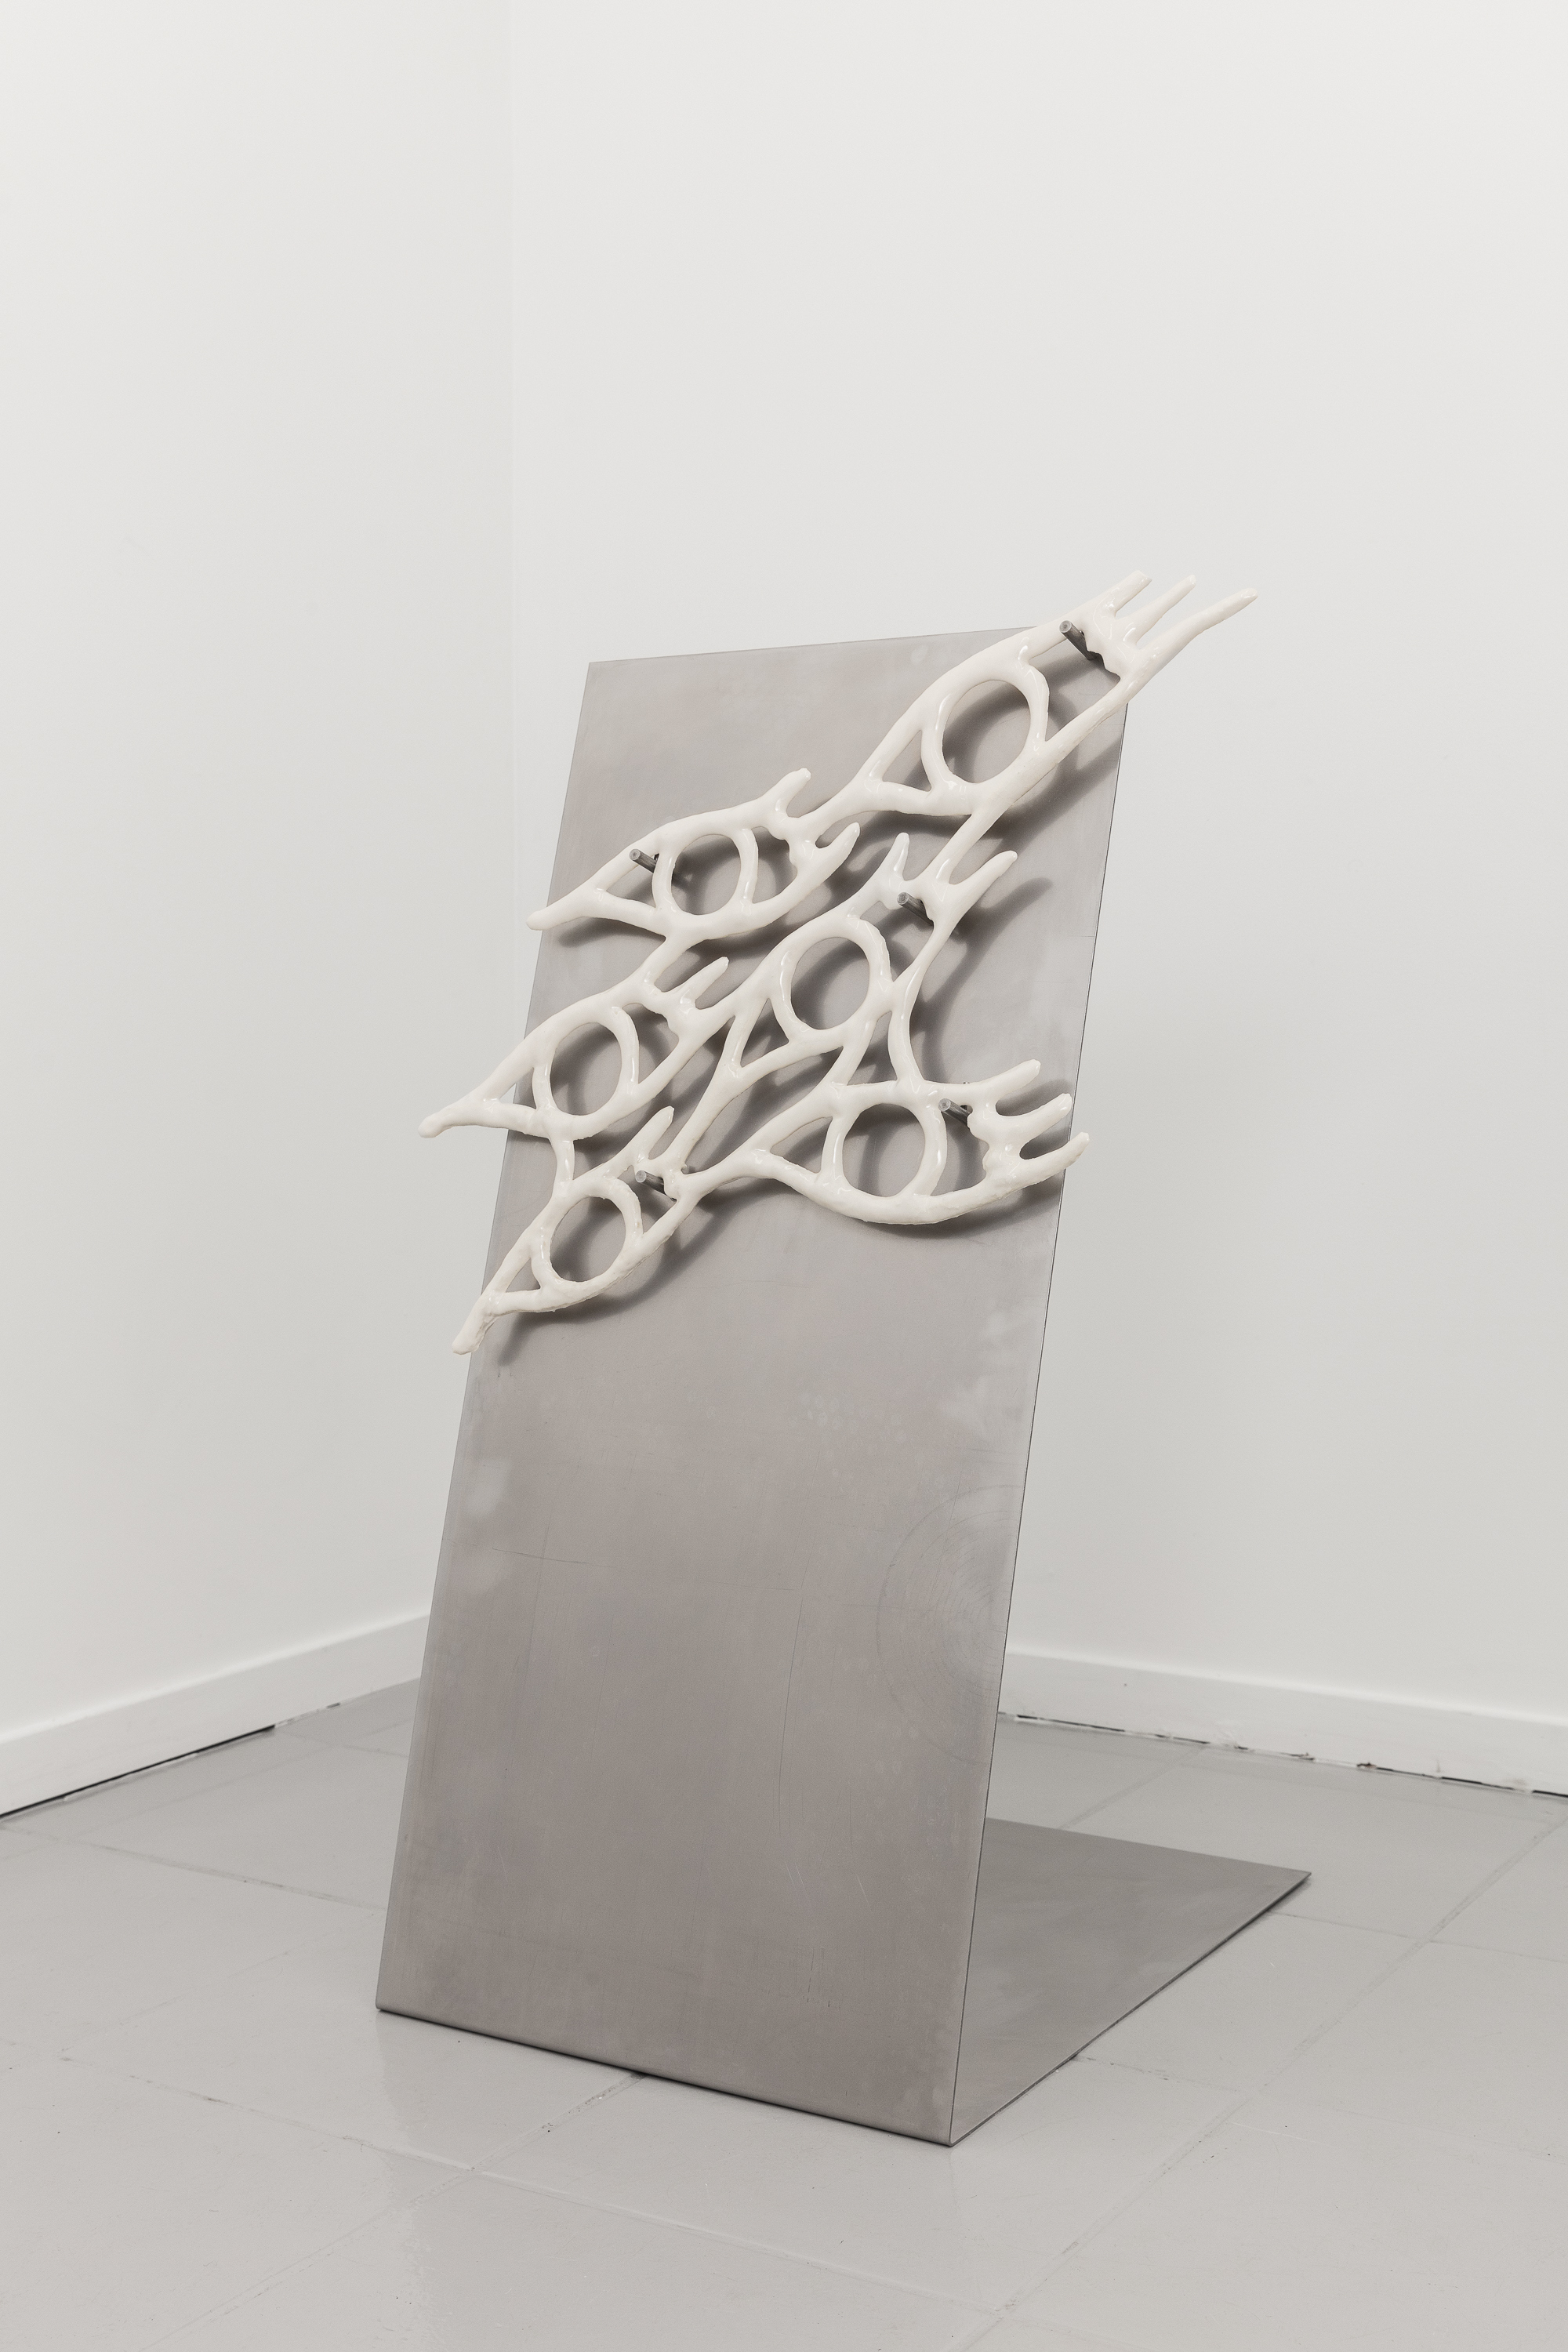 Julia K. Persson, BlÃ¥Ã¶ga, 2023, Glazed porcelain, steel stand, 88.5 x 40.5 x 56 cm